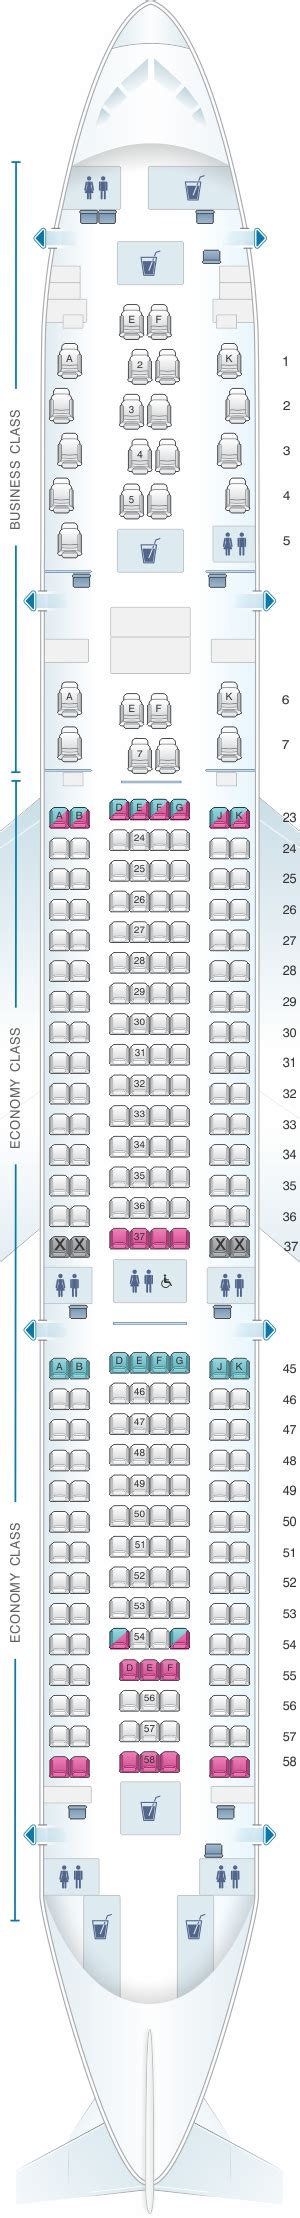 Seatguru Seat Map Qantas